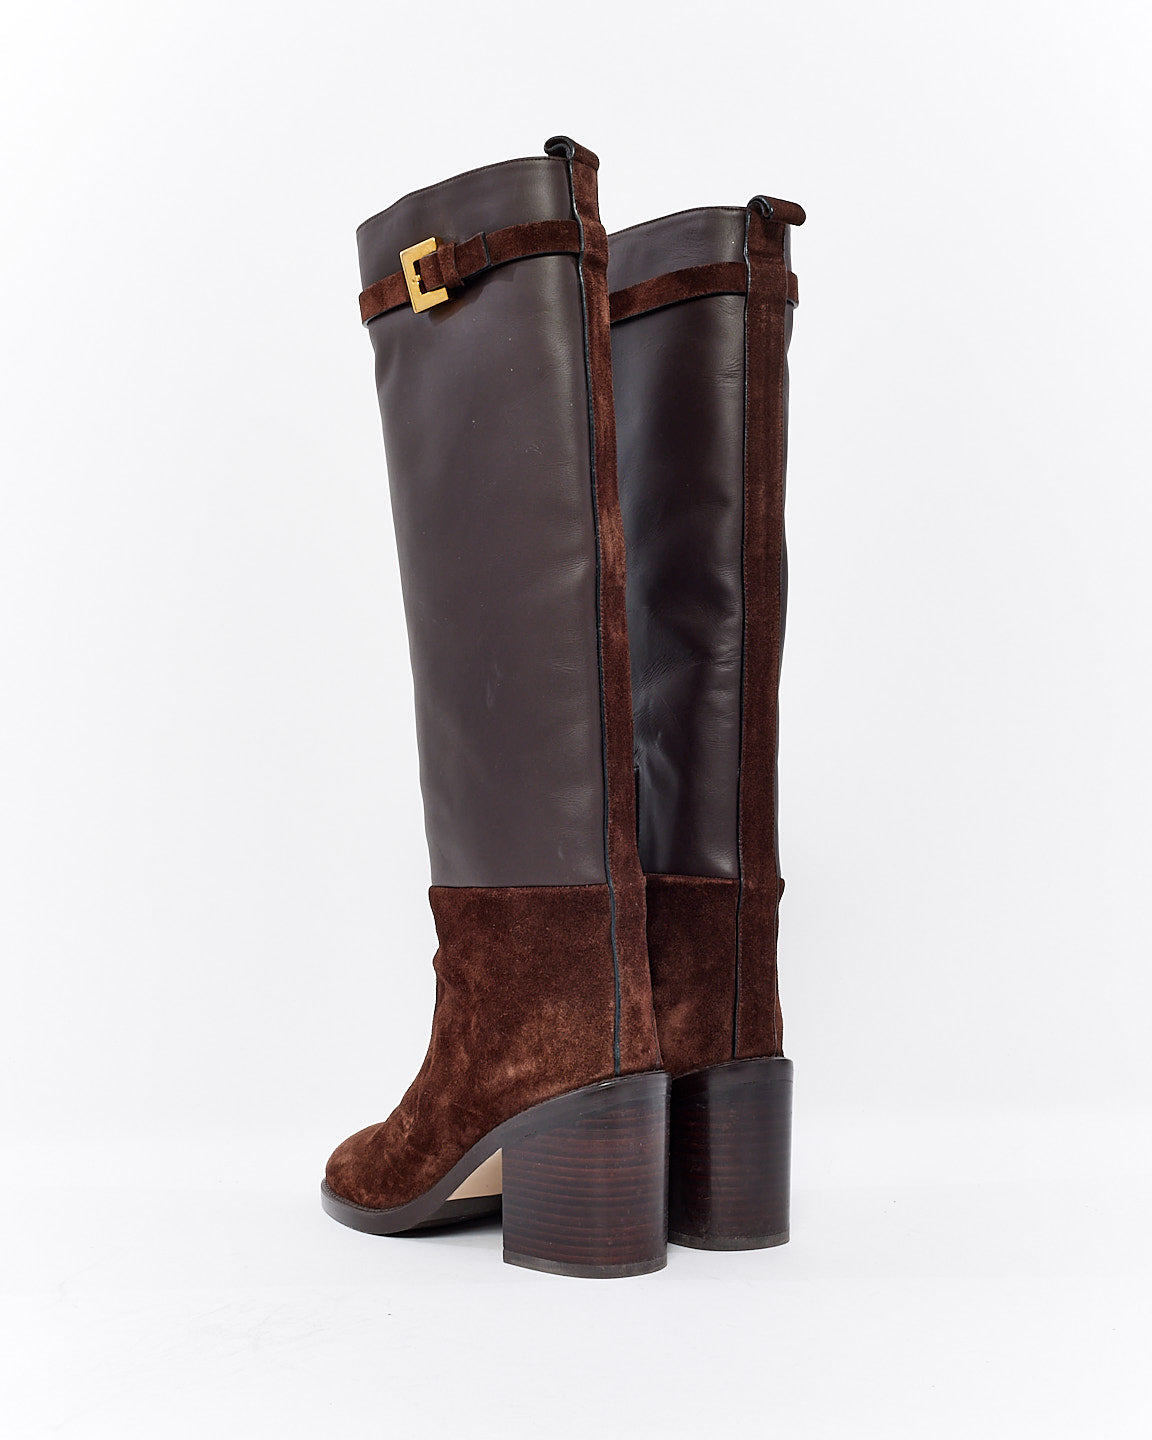 Stuart Weitzman Brown Suede & Leather Knee High Boots - 5.5